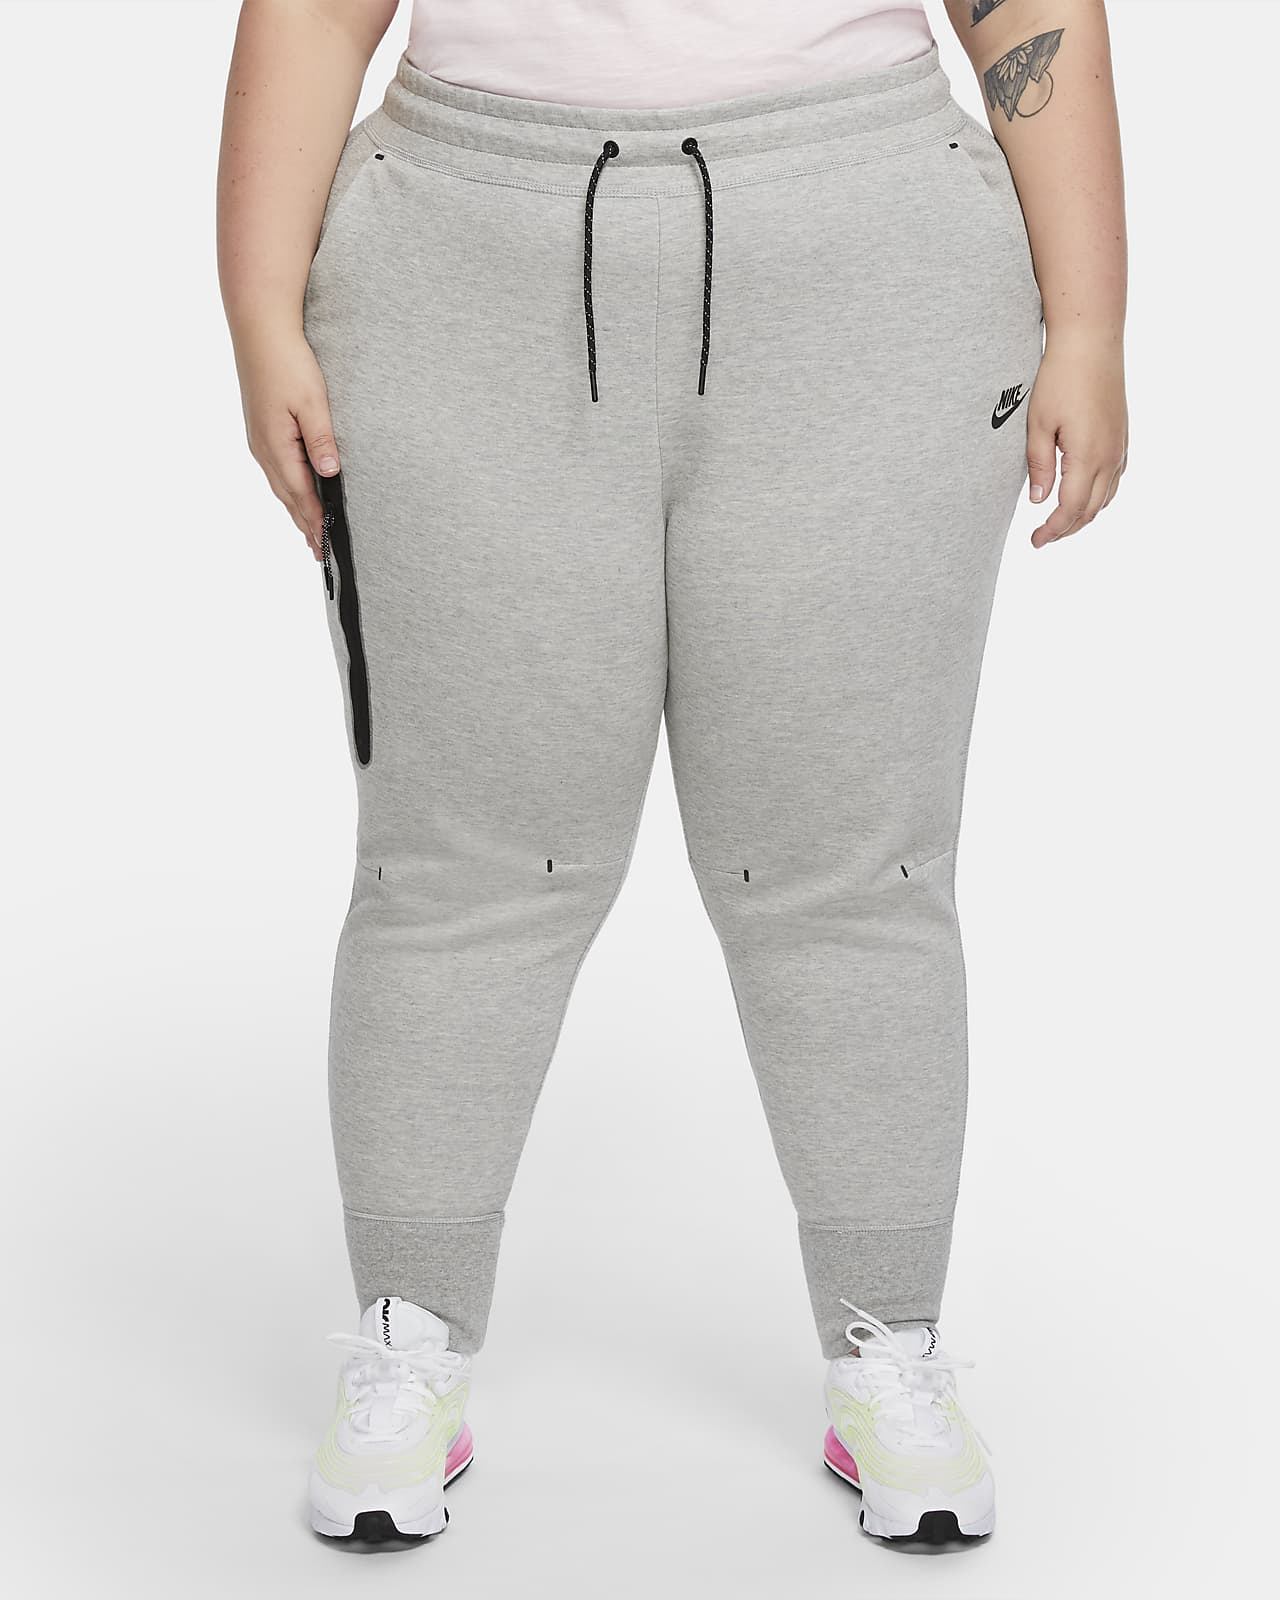 Nike Tech Fleece Trousers (Plus Size). Nike